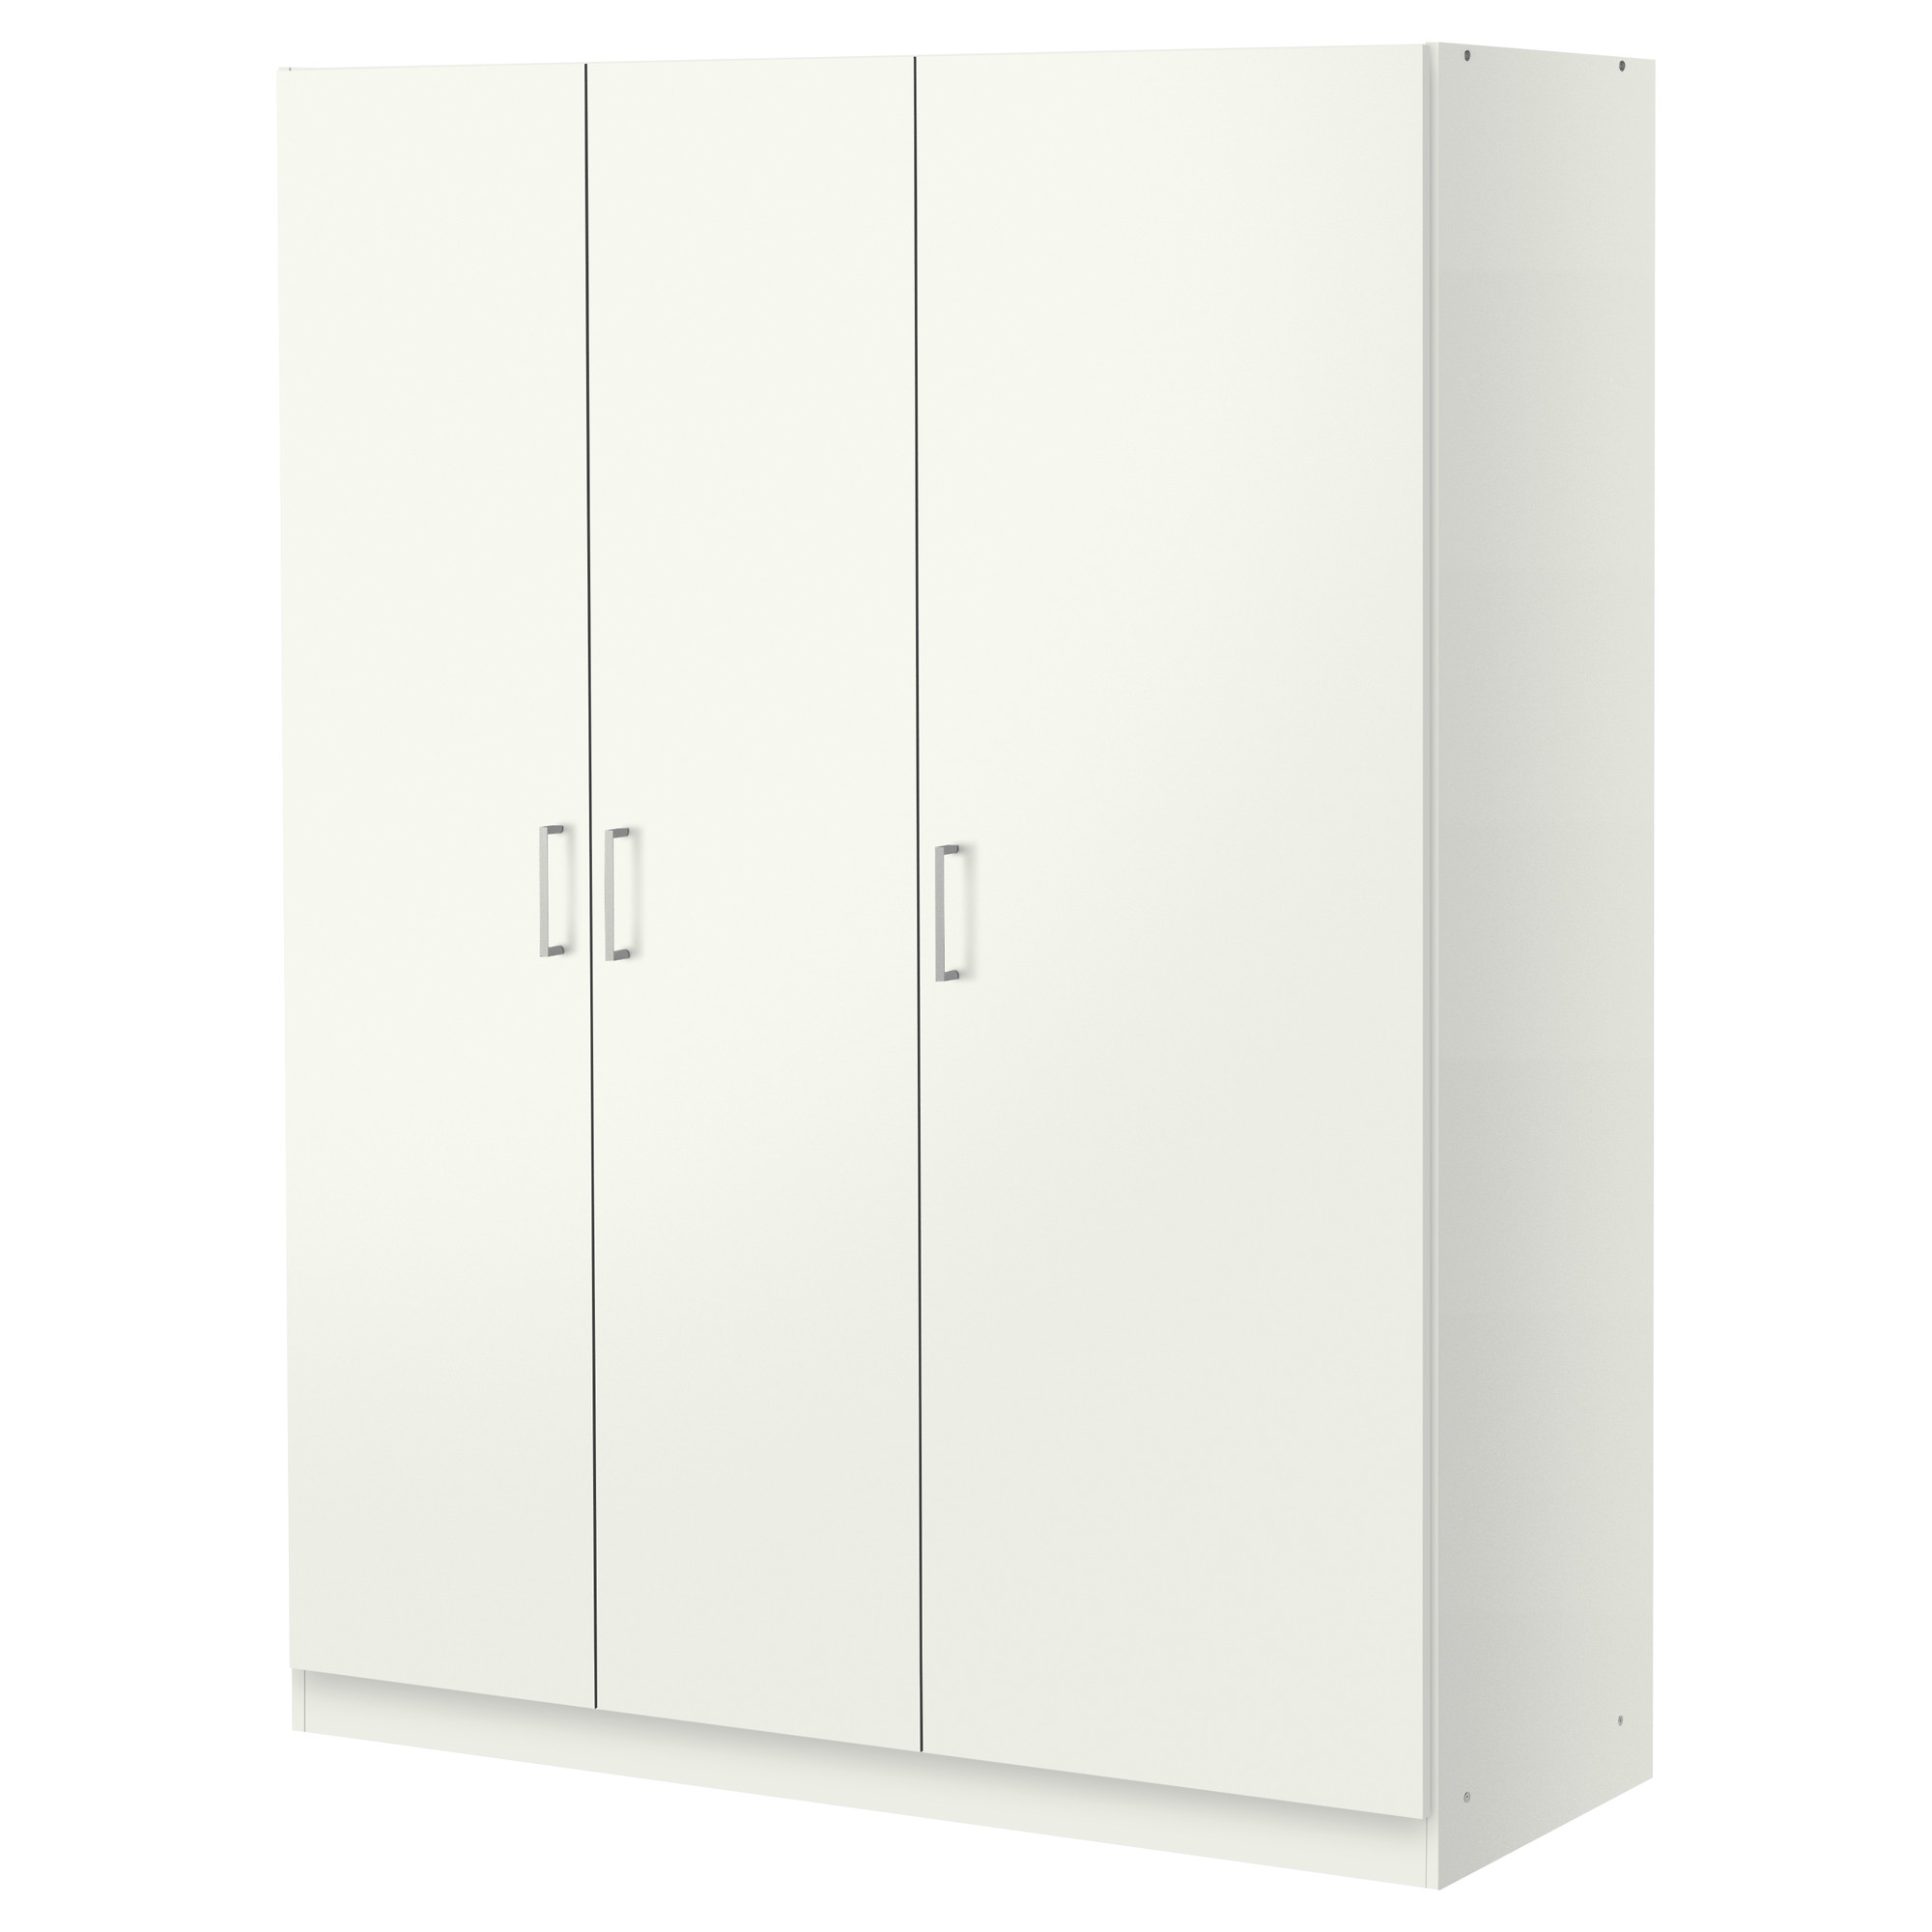 white wardrobes ikea dombås wardrobe adjustable shelves make it easy to customise the space KYQQLGI